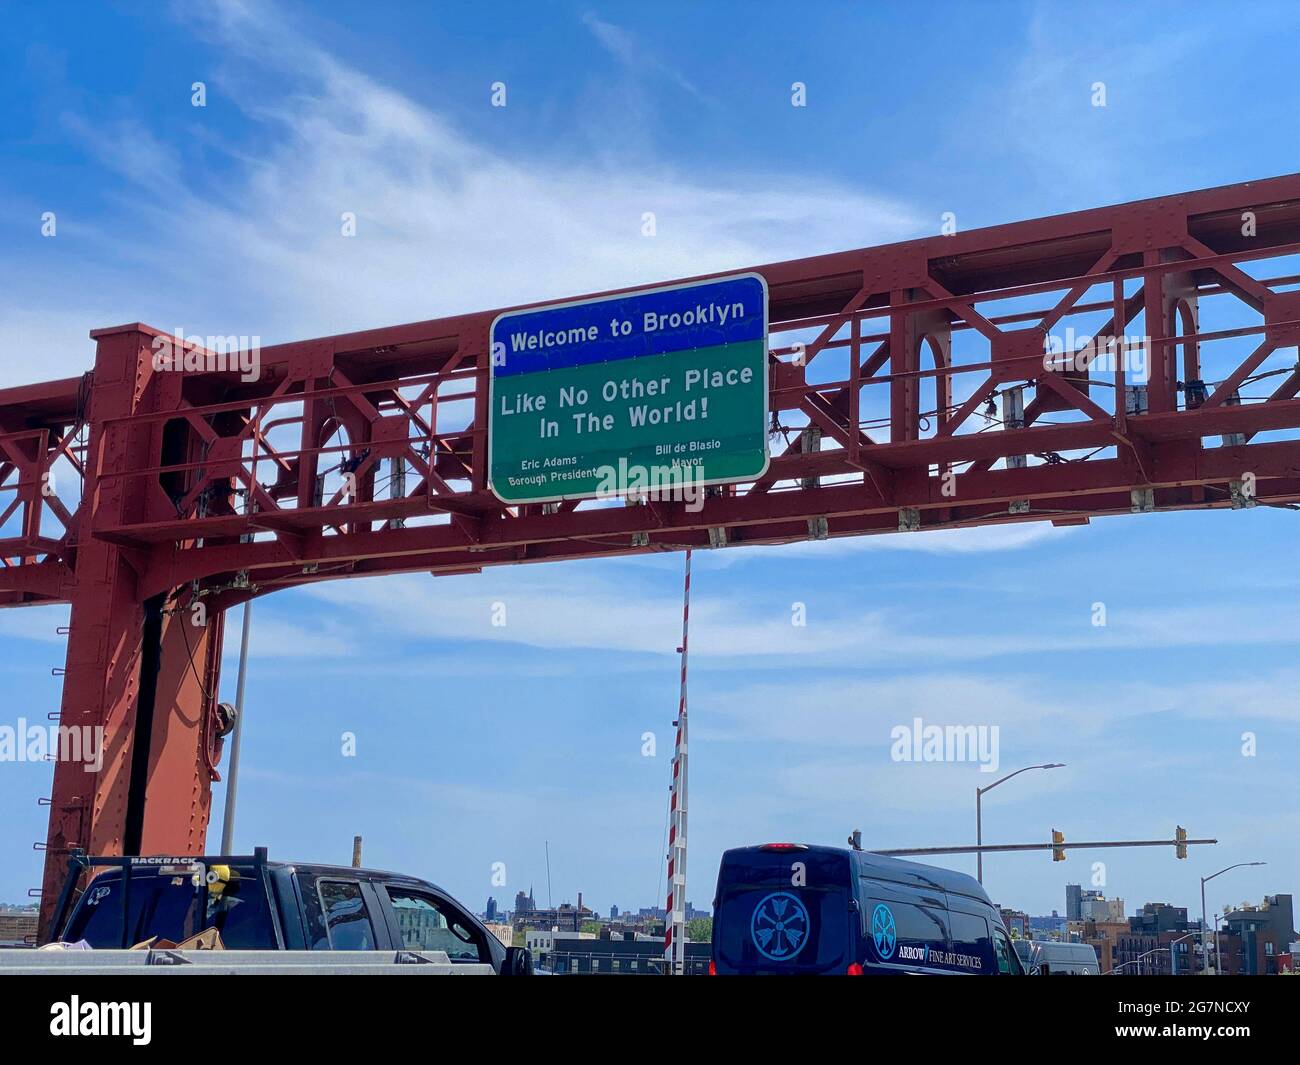 Brooklyn, NY, USA - July 15, 2021: Welcome sign to Brooklyn showing Eric Adams and Bill de Blasio names overhead on the Pulaski Bridge Stock Photo